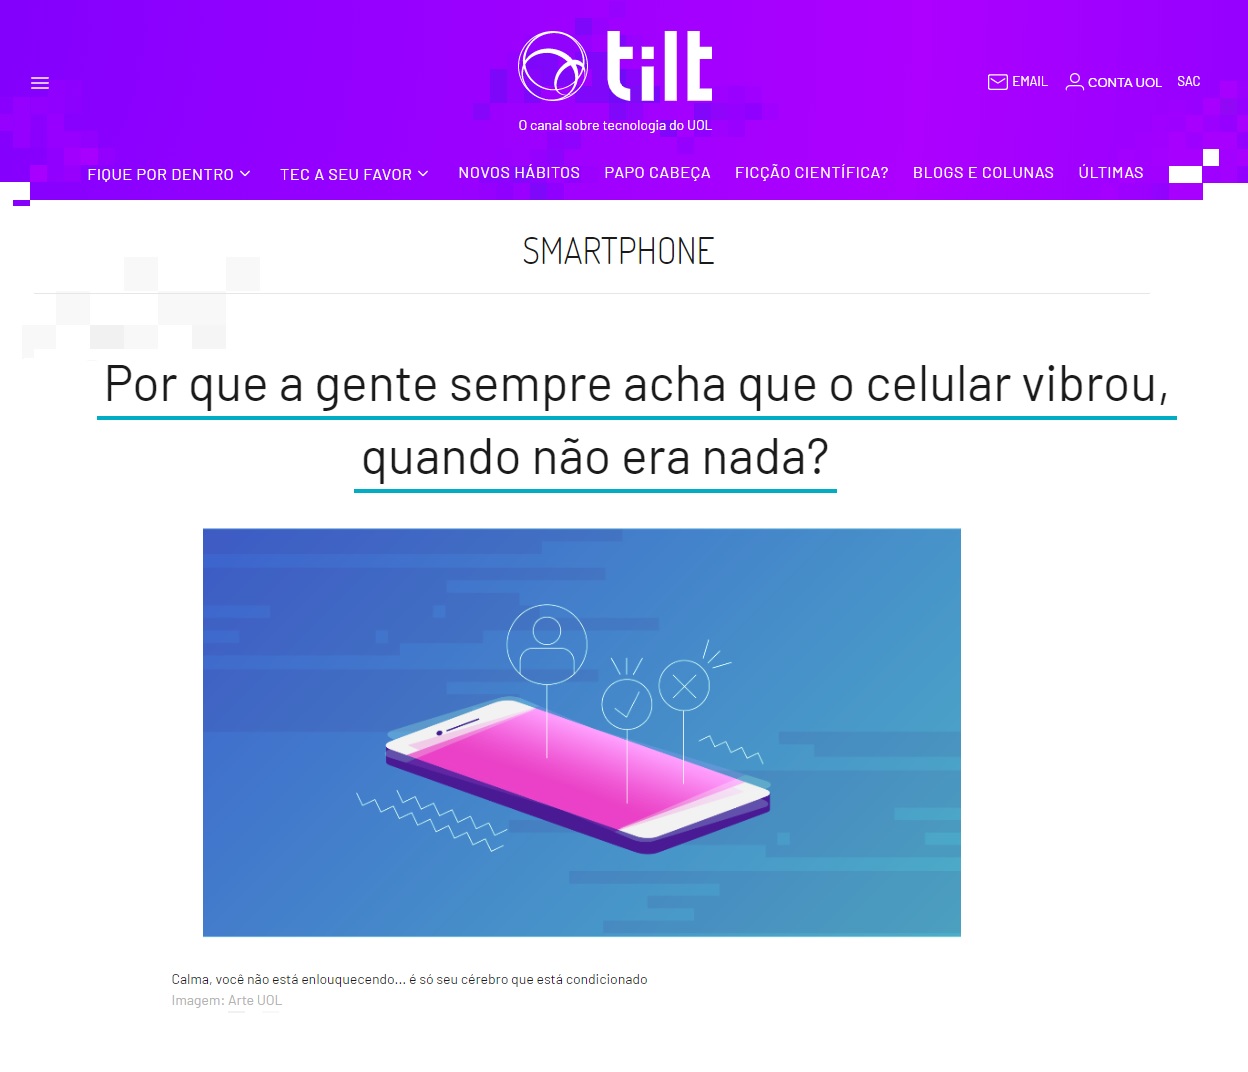 UOL Tilt - Dr. Fábio Aurélio Leite HSLN - 14-08-2019